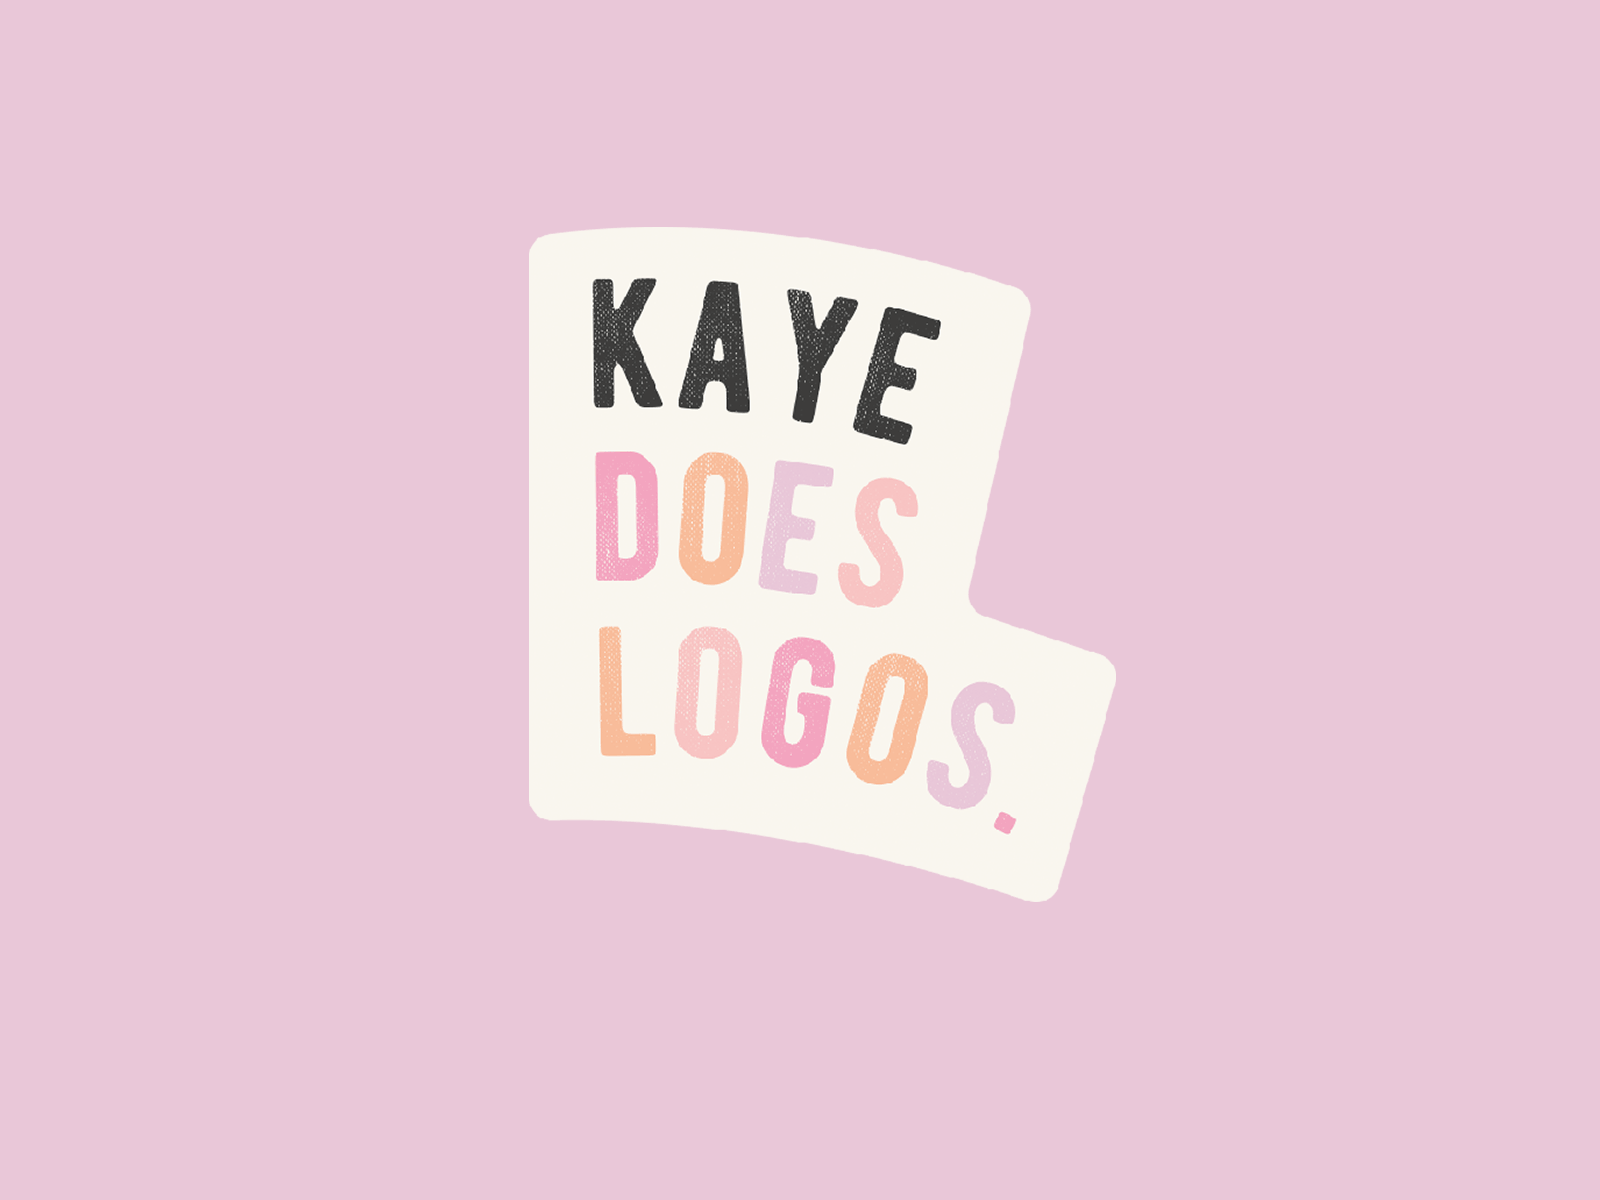 Kaye does logos.